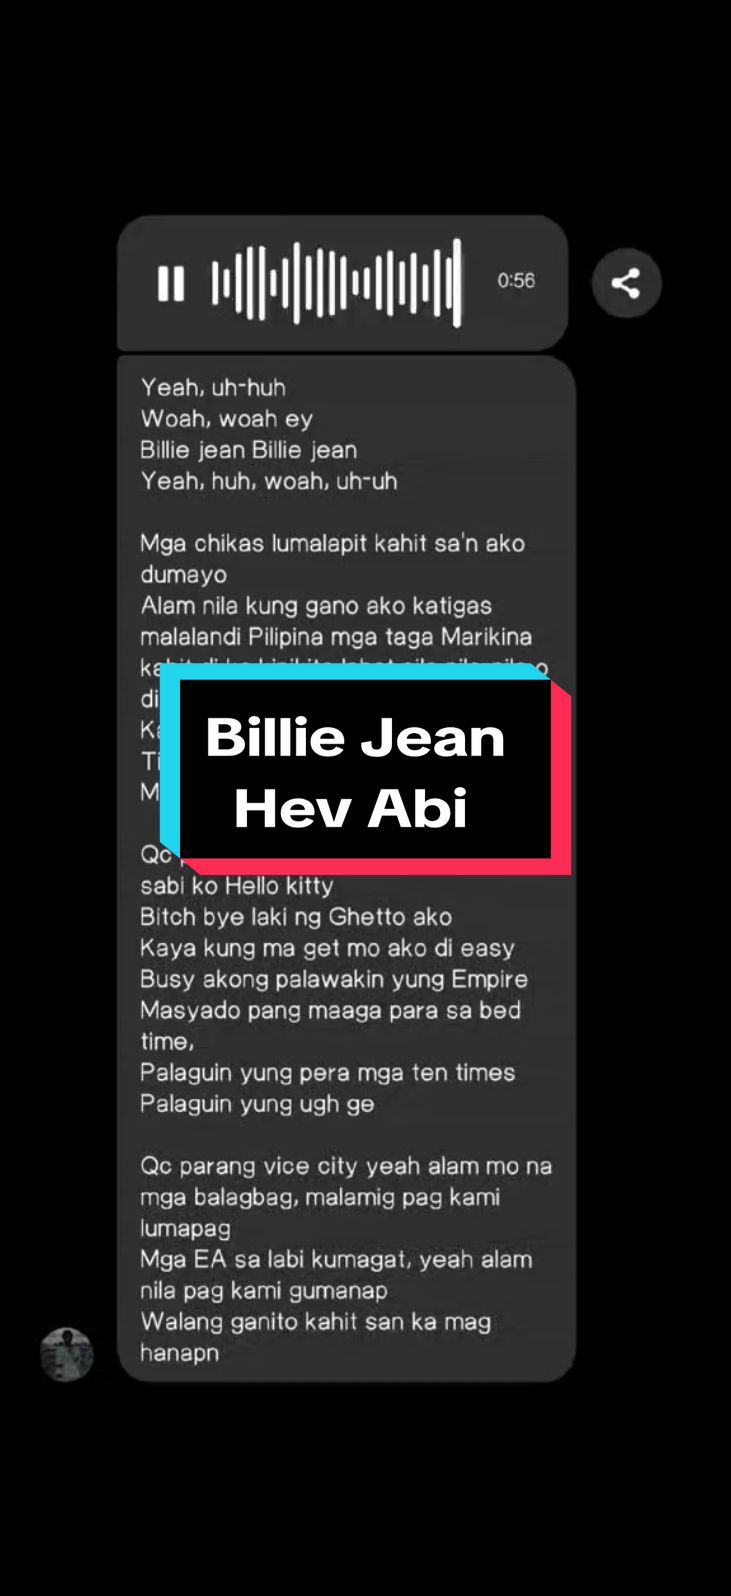 puro na billie jean sa fyp ko eh, try ko na rin i cover Billie Jean - Hev abi Unreleased (cover) #hevabi #billiejean #cover #song #singing #xyzbca #music #foryou #heli #songlyrics 